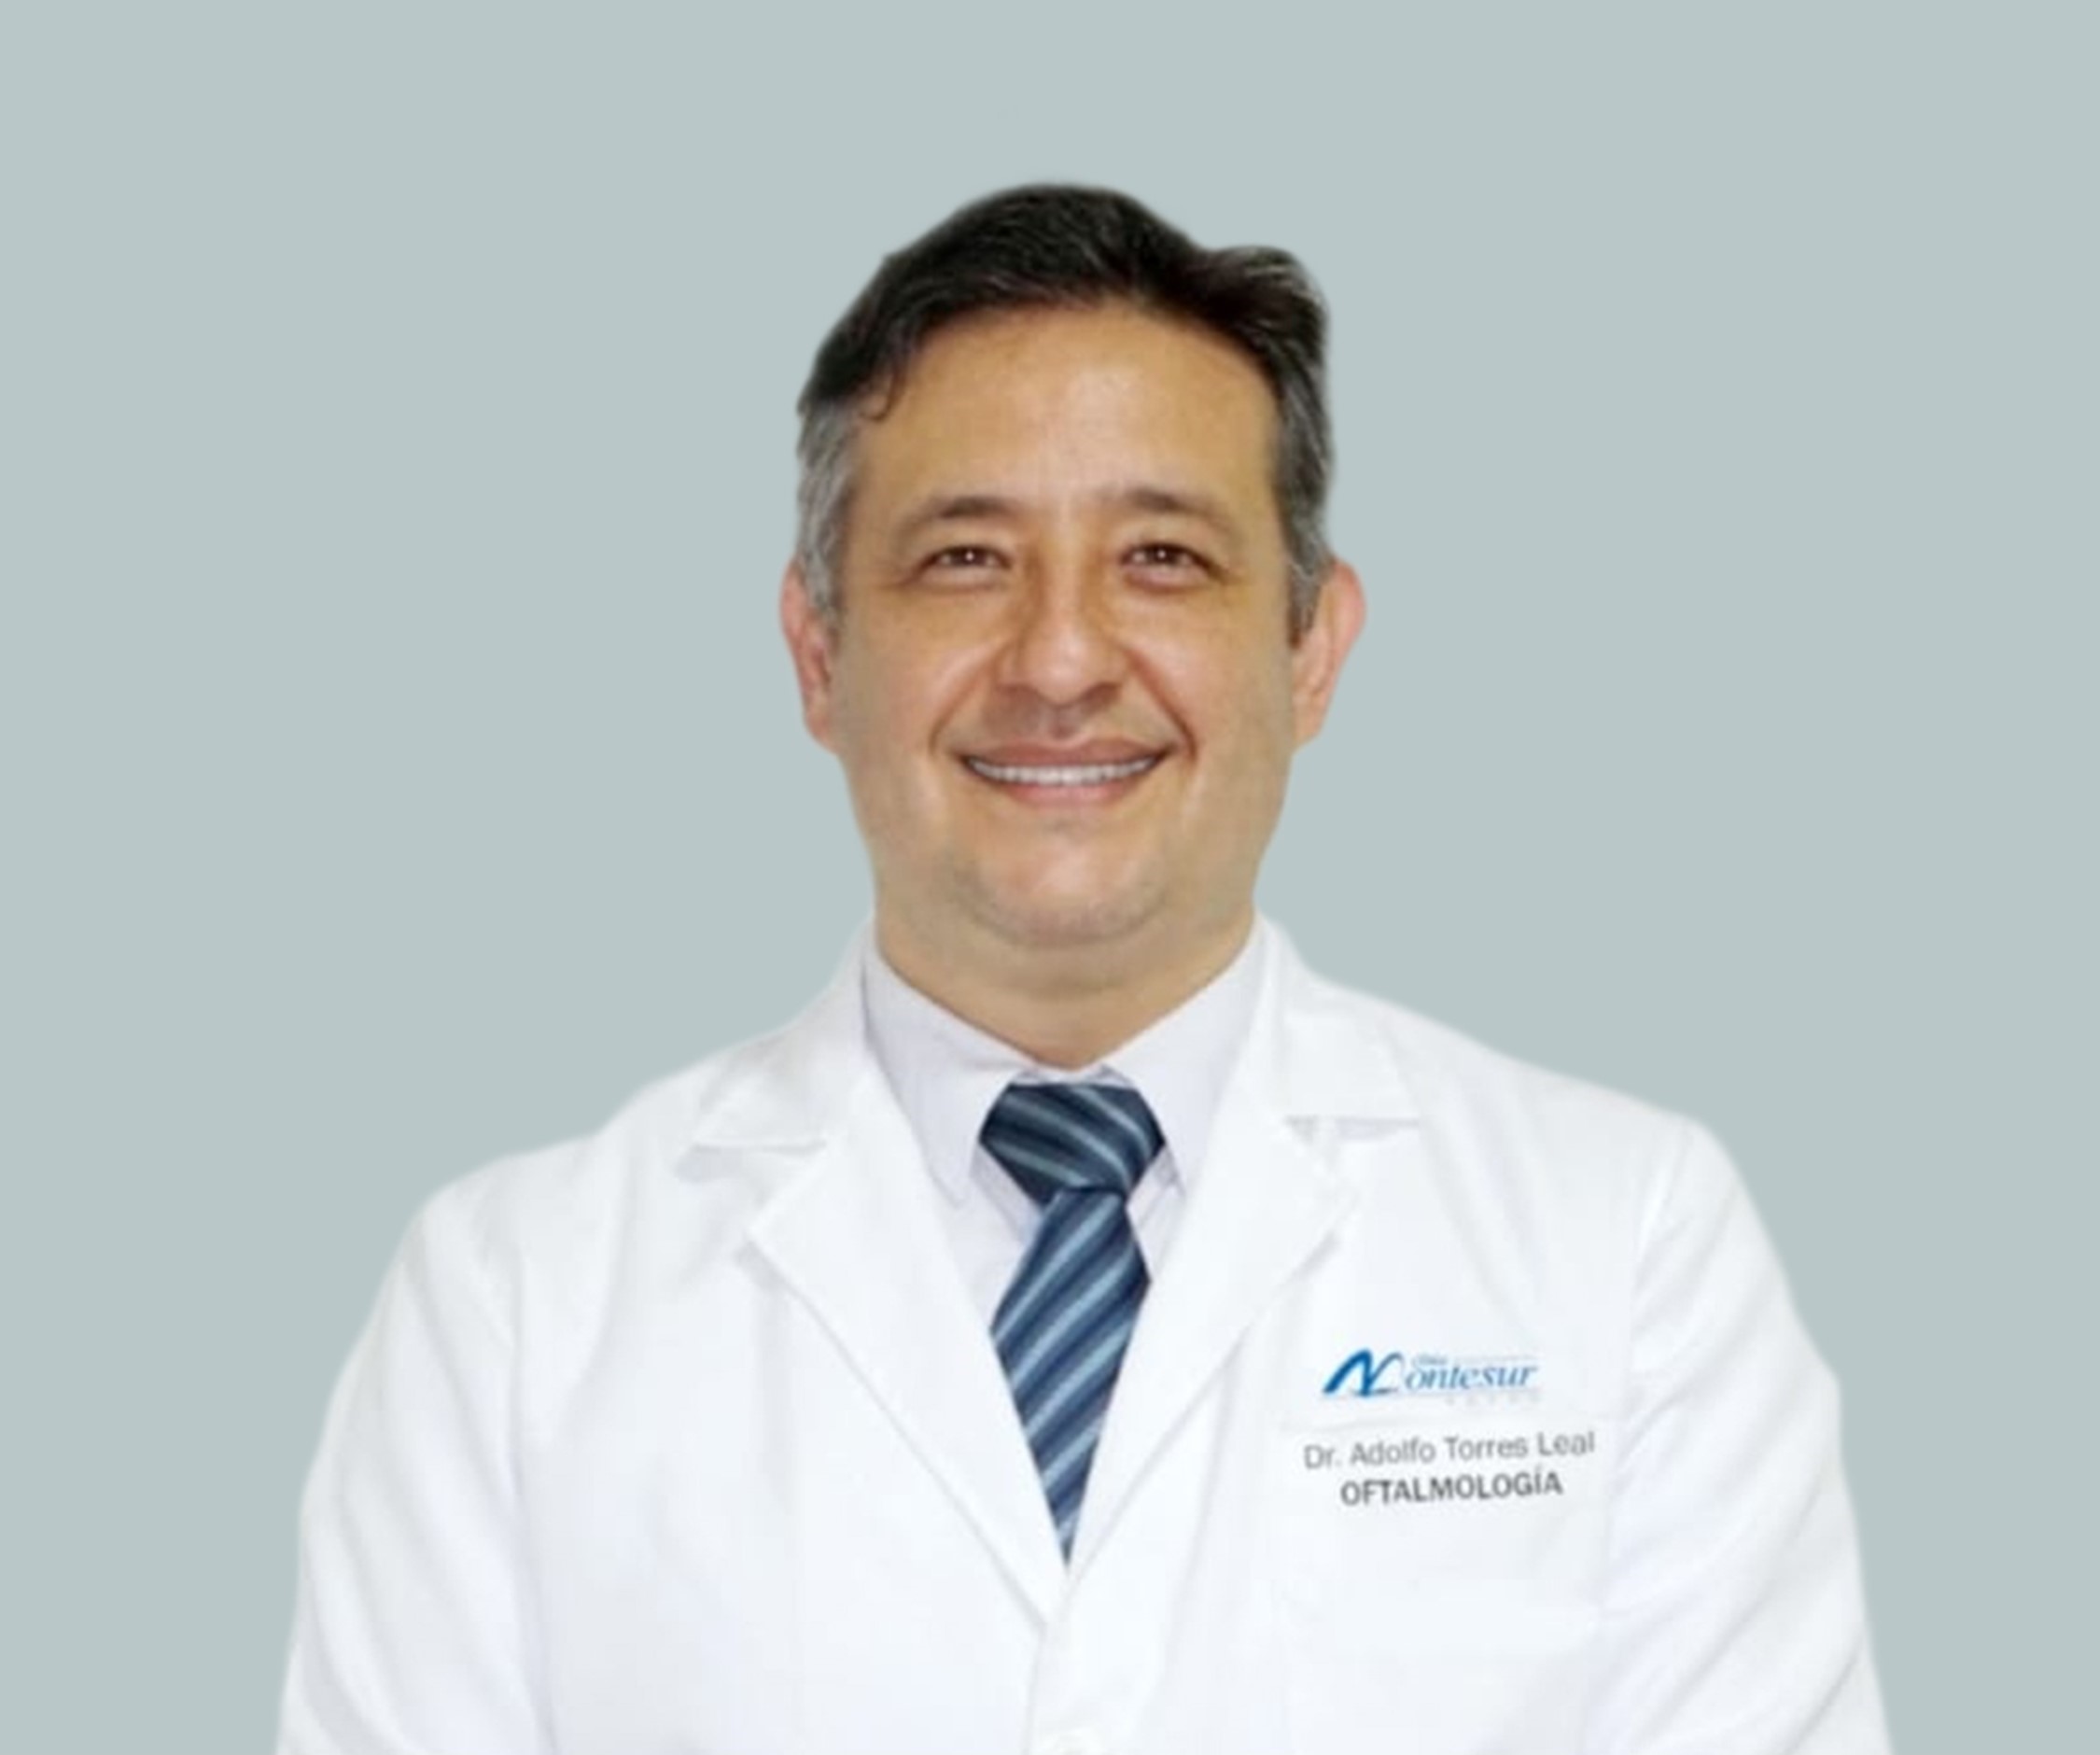 Dr. ADOLFO TORRES LEAL Oftalmologos Oftalmología Oftalmologo Oftalmólogo